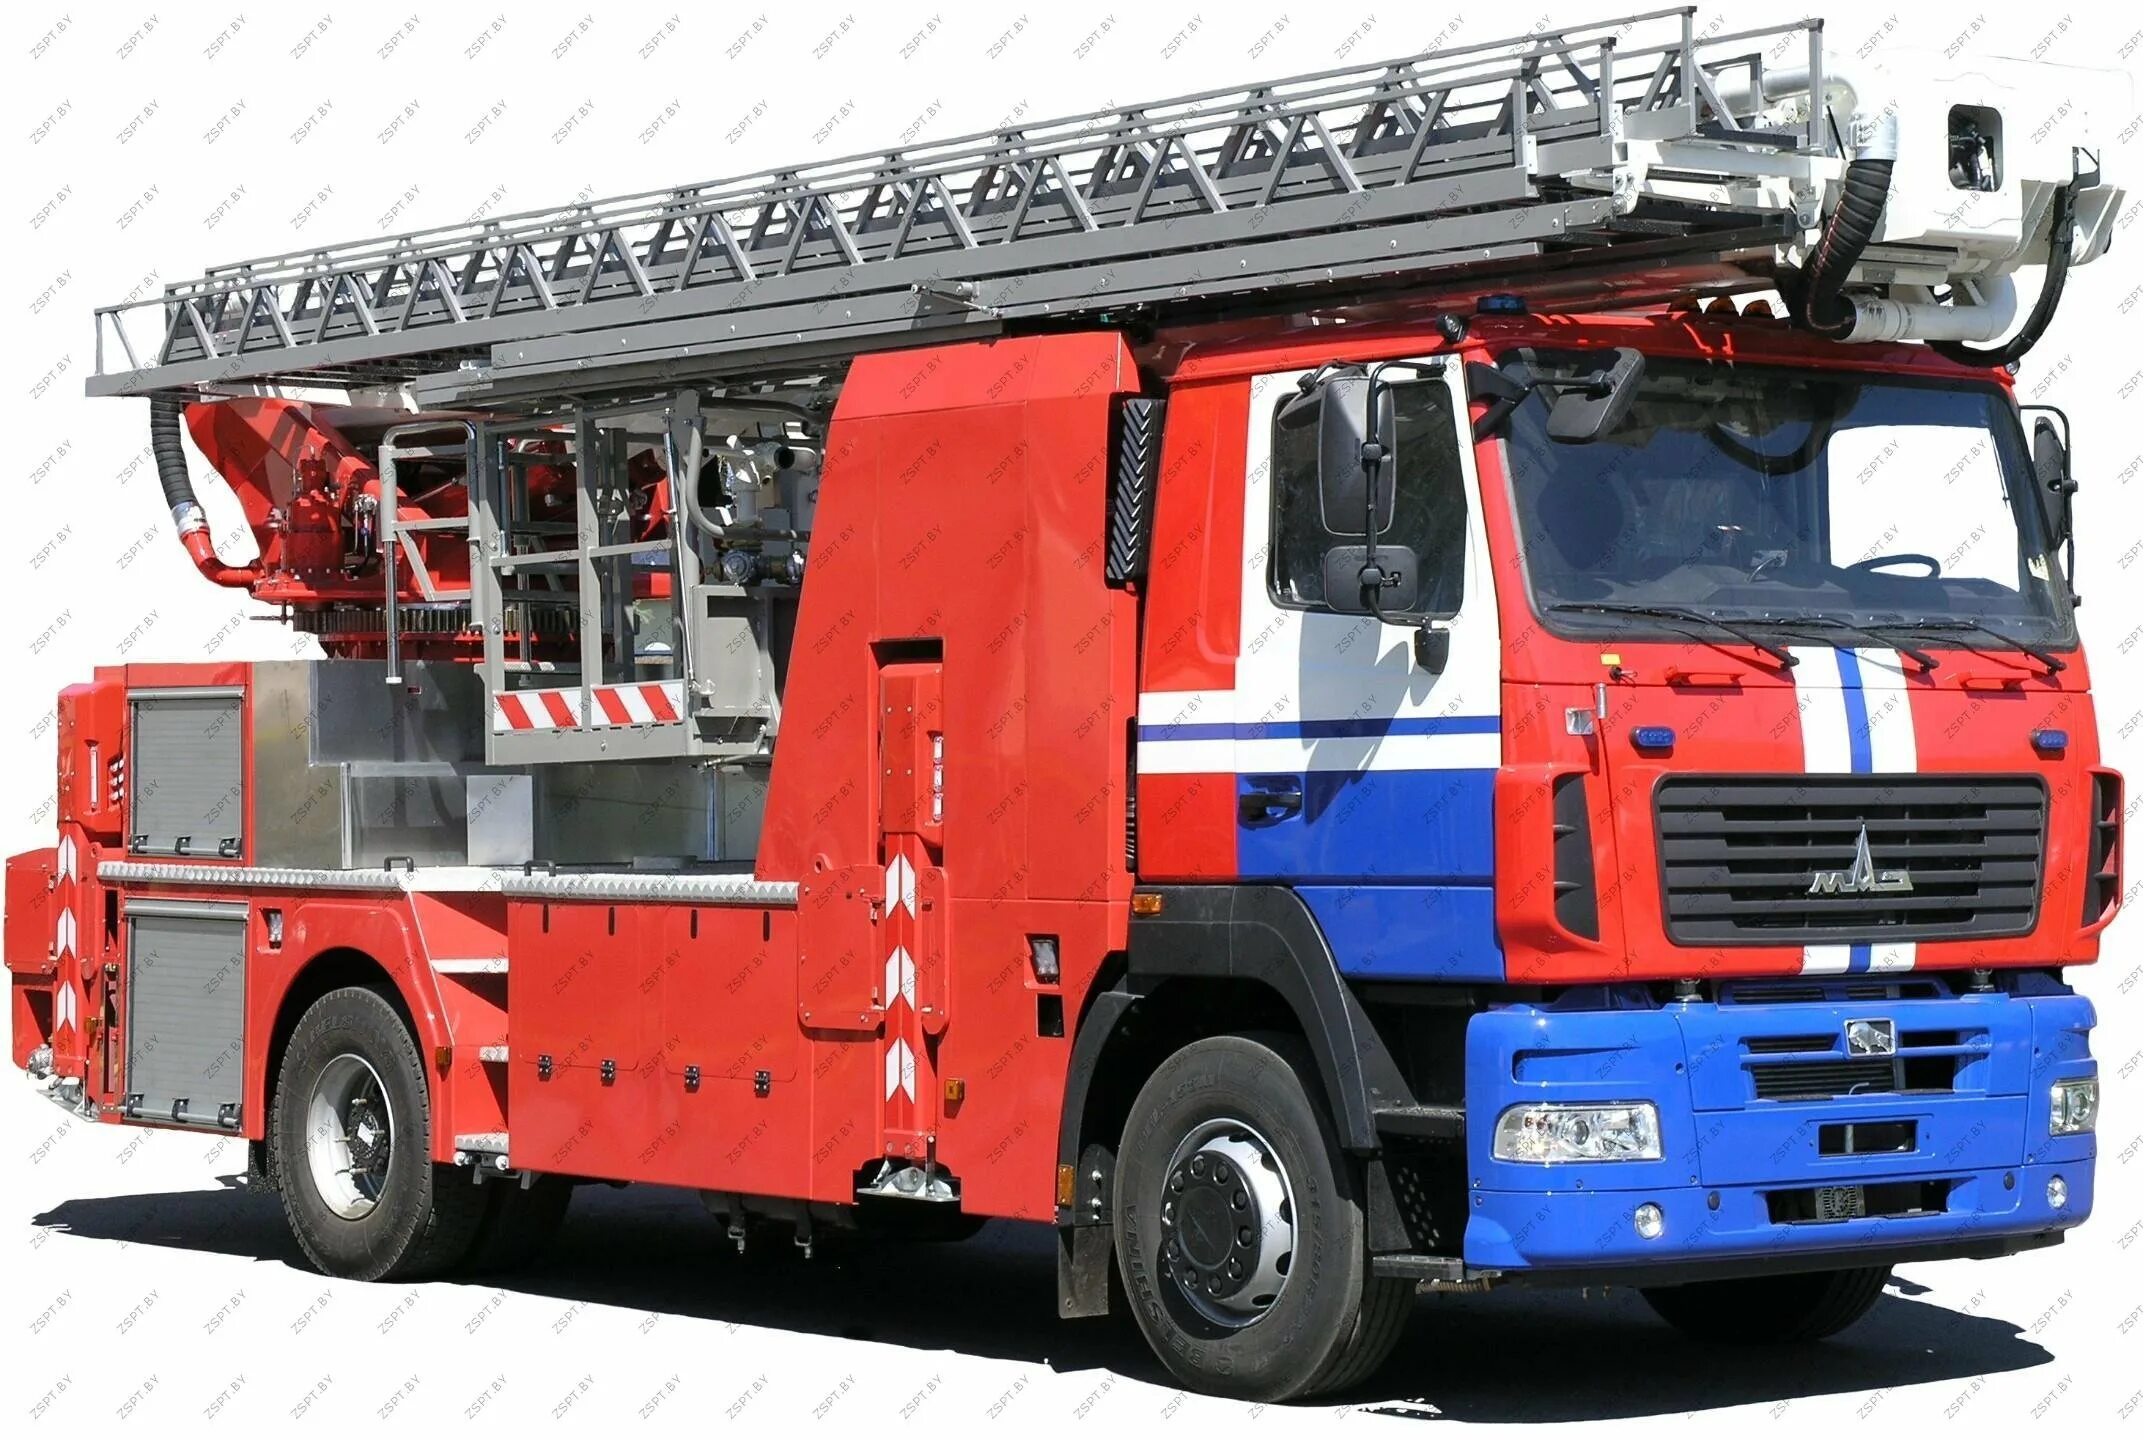 Автолестница пожарная ал-32 (5340). Пожарная автолестница МАЗ. Автолестница пожарная ал-30 МАЗ. Автолестница пожарная ал-30 (5340).